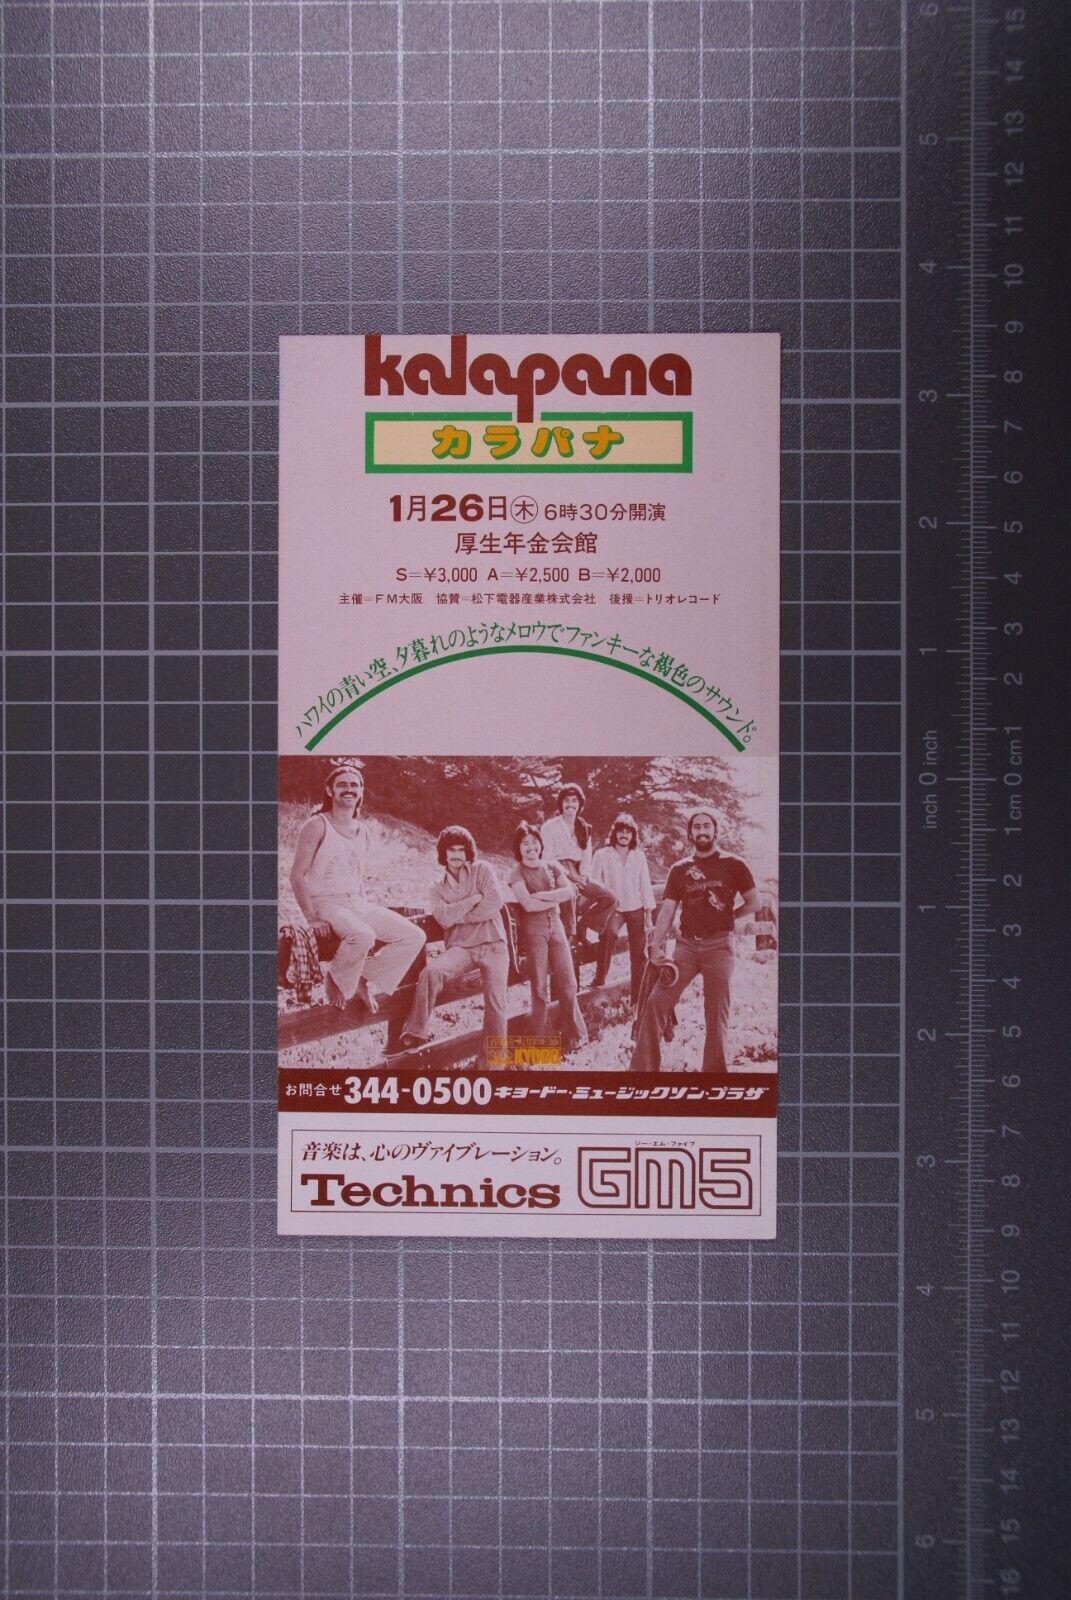 Kalapana Flyer Official Vintage Japanese Tour Promotion 1978